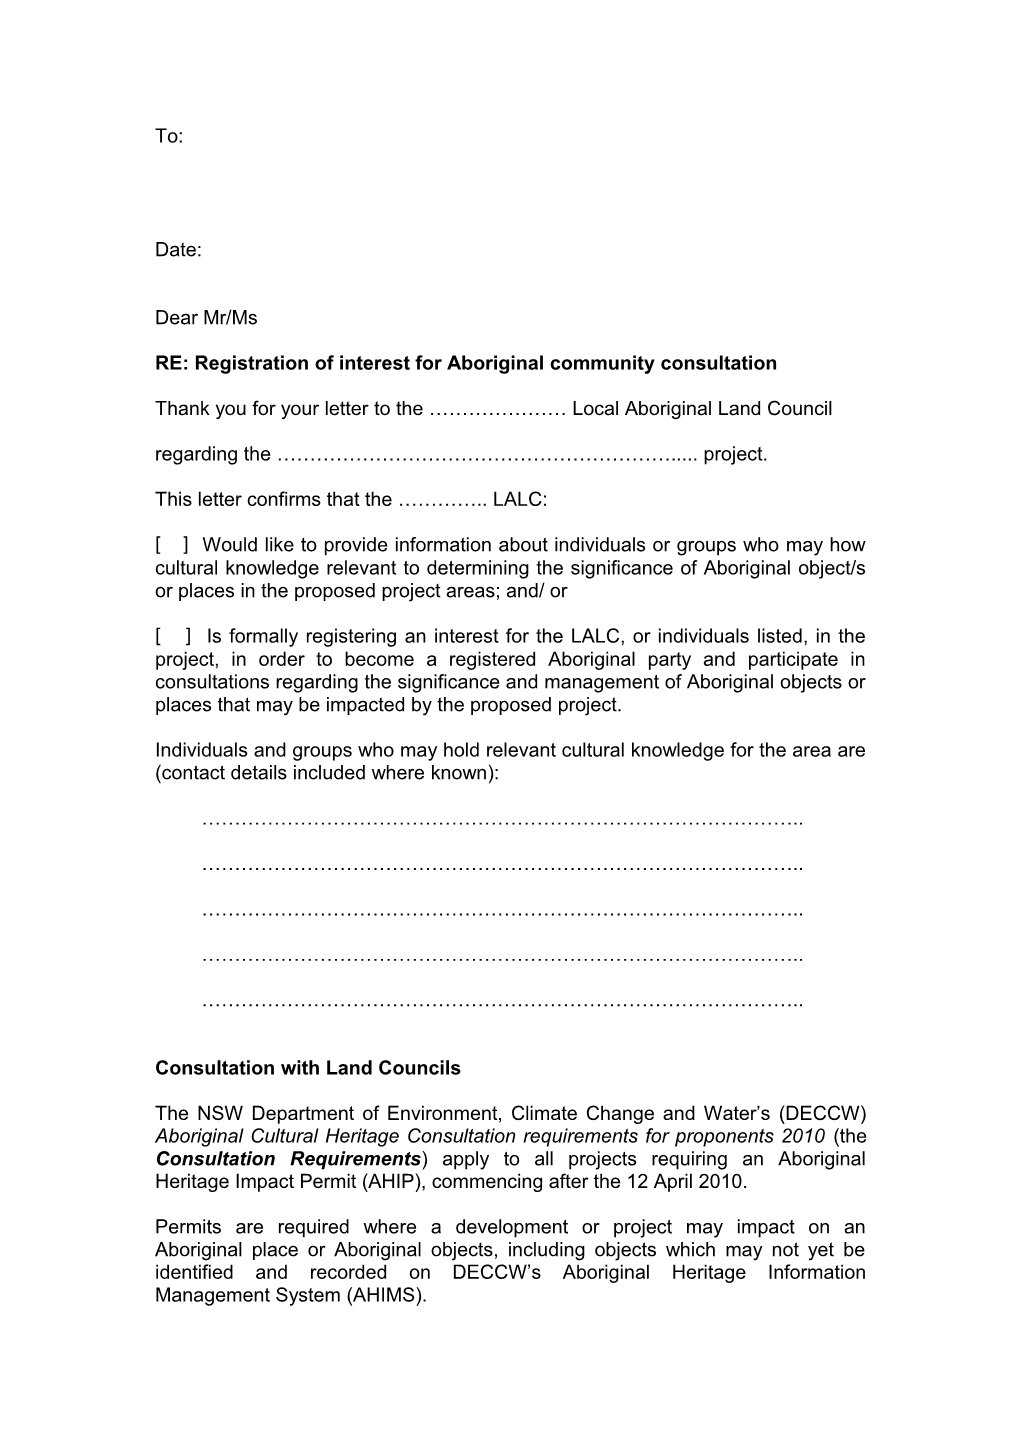 RE: Registration of Interest for Aboriginal Community Consultation